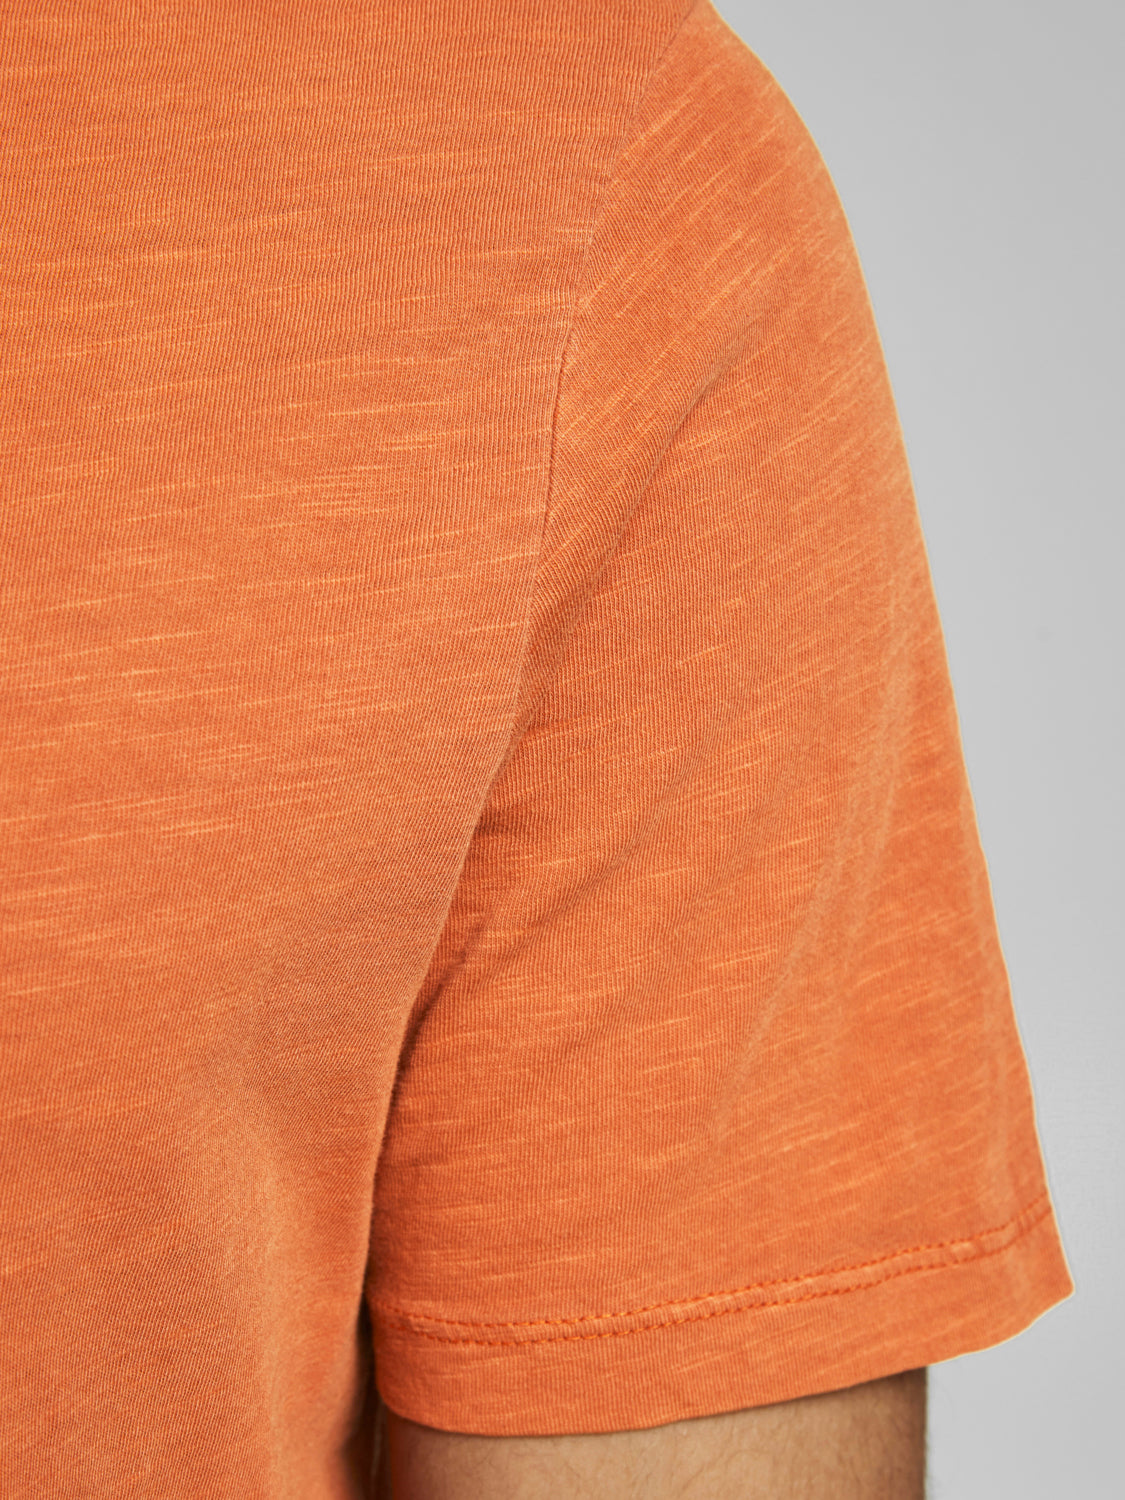 Camiseta naranja básica cuello pico con botones - SPLIT